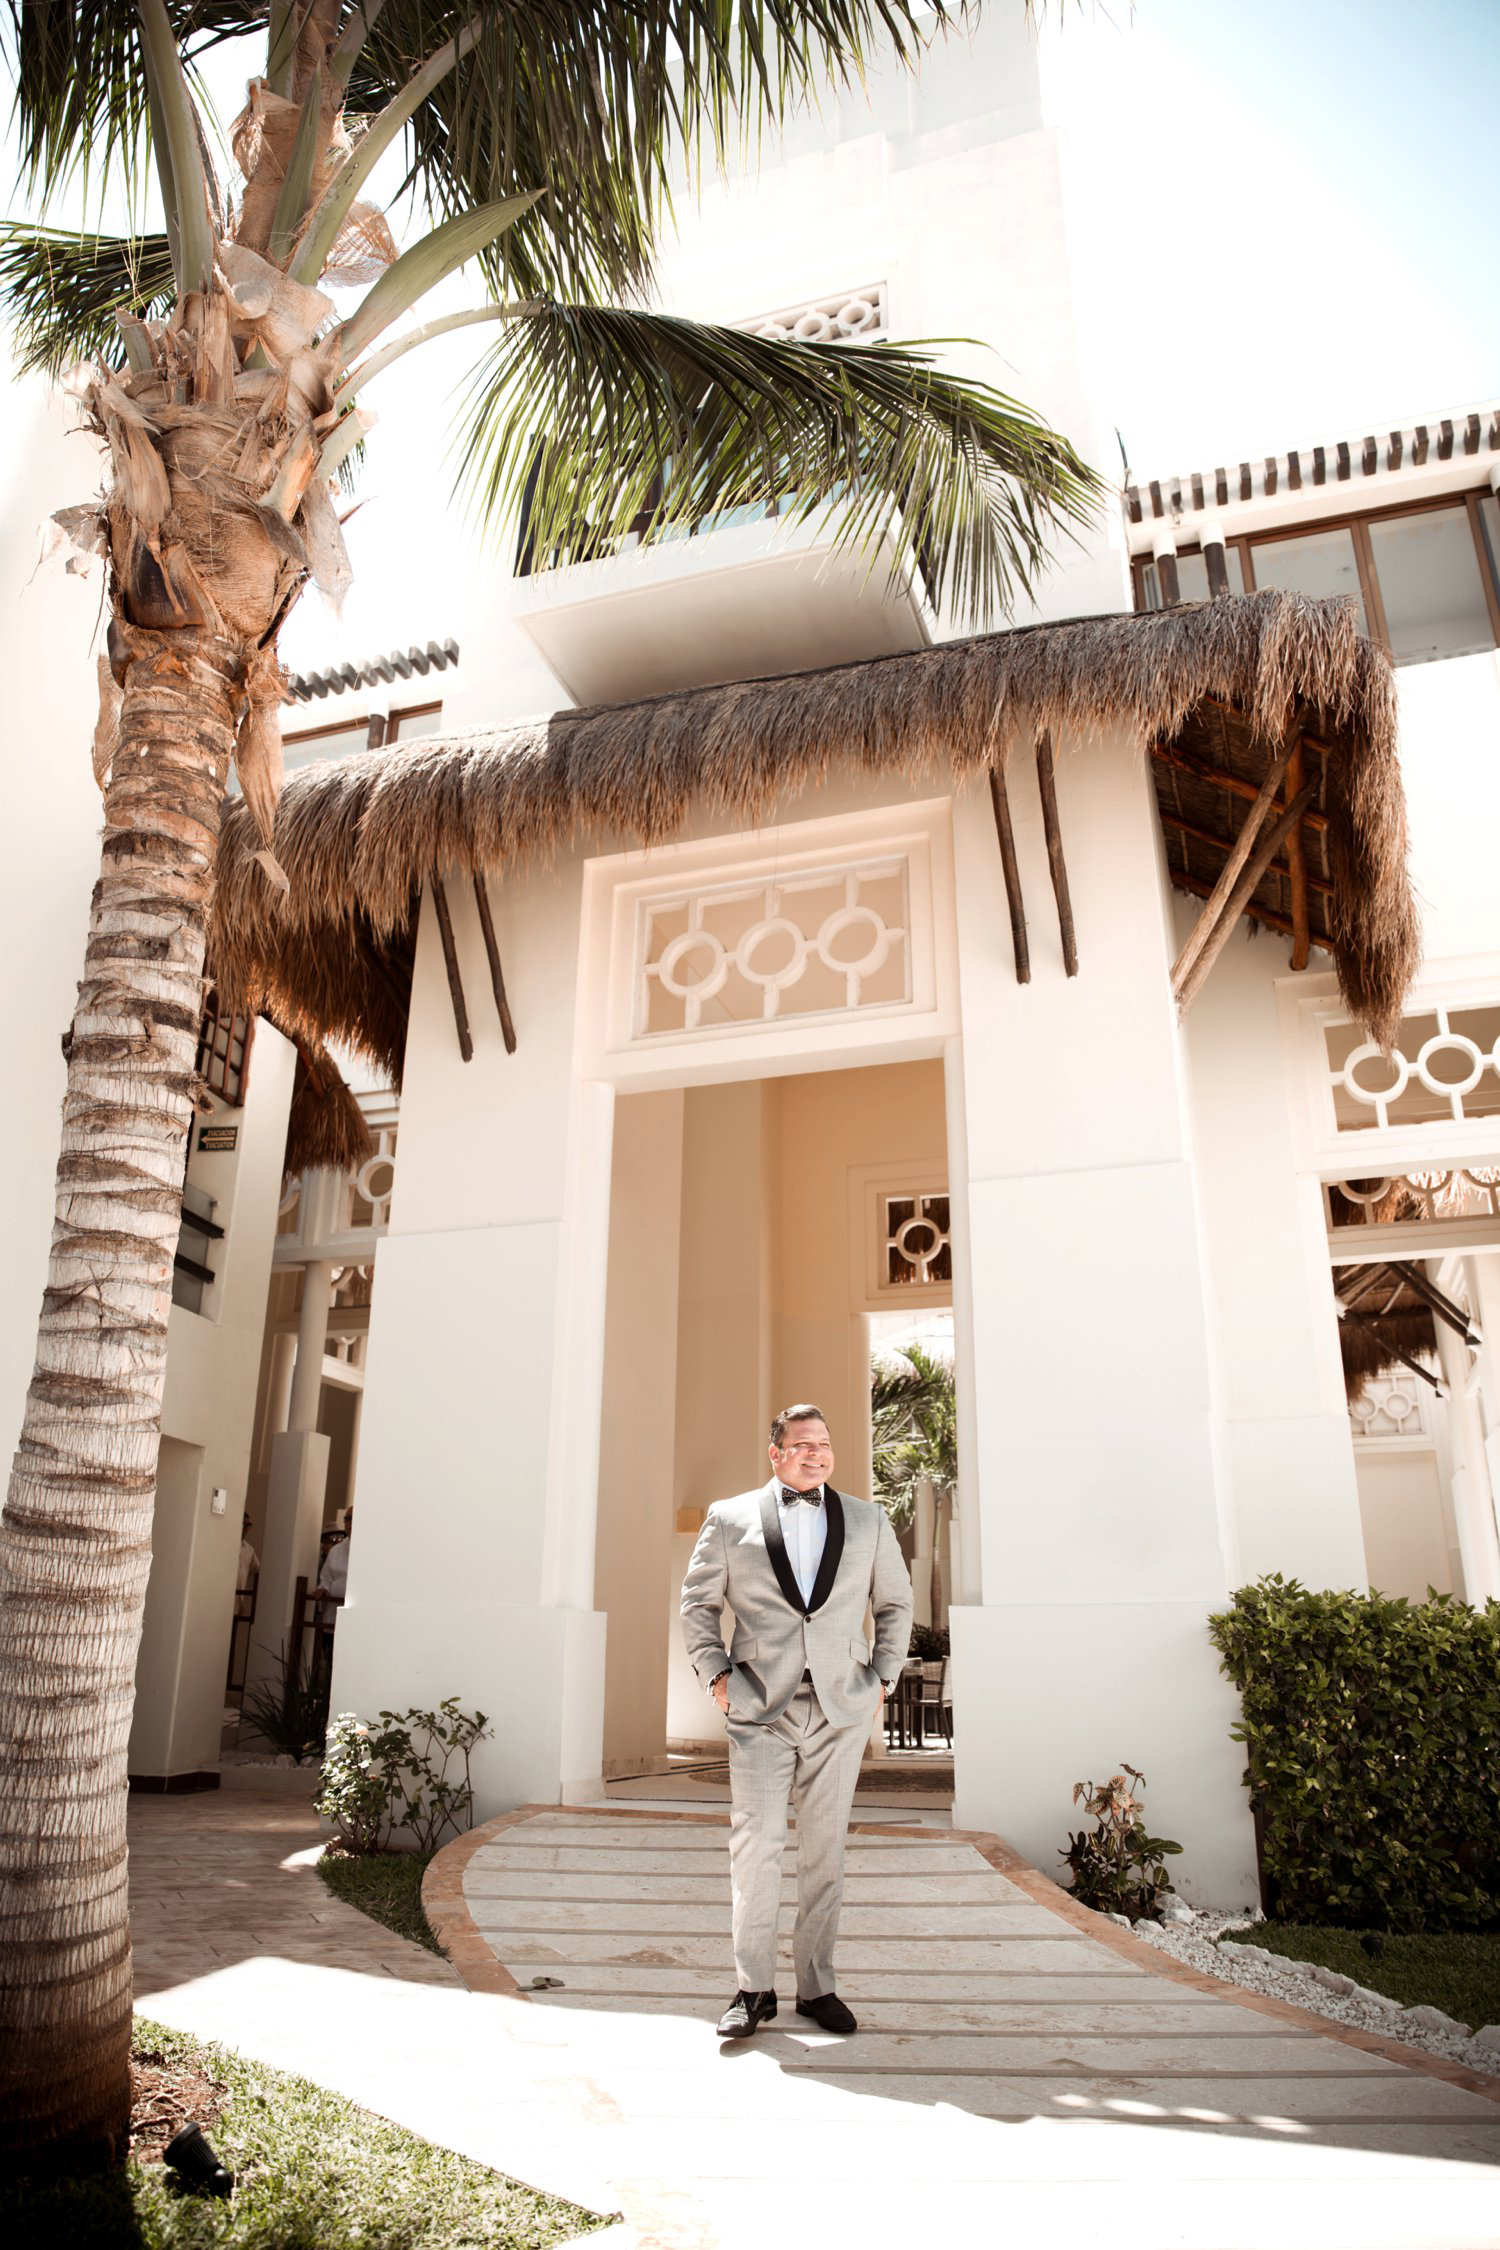  images by feliciathephotographer.com | destination wedding photographer | mexico | tropical | fiji | venue | azul beach resort | riviera maya | getting ready | details | groom | palm trees | pre-ceremony | grey suit | black tie attire | 